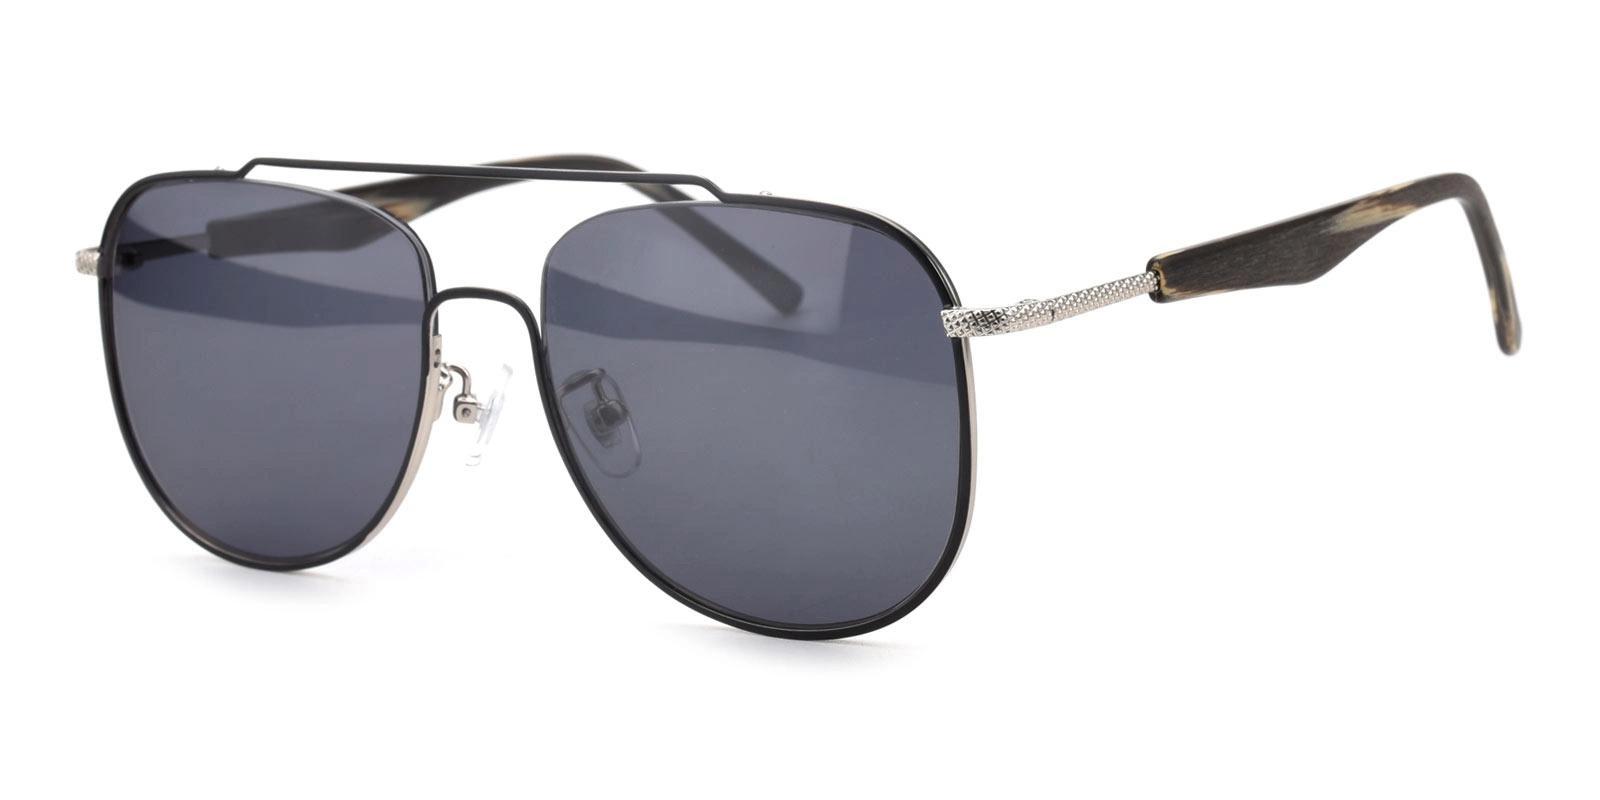 Hemile Silver Metal Sunglasses , NosePads Frames from ABBE Glasses